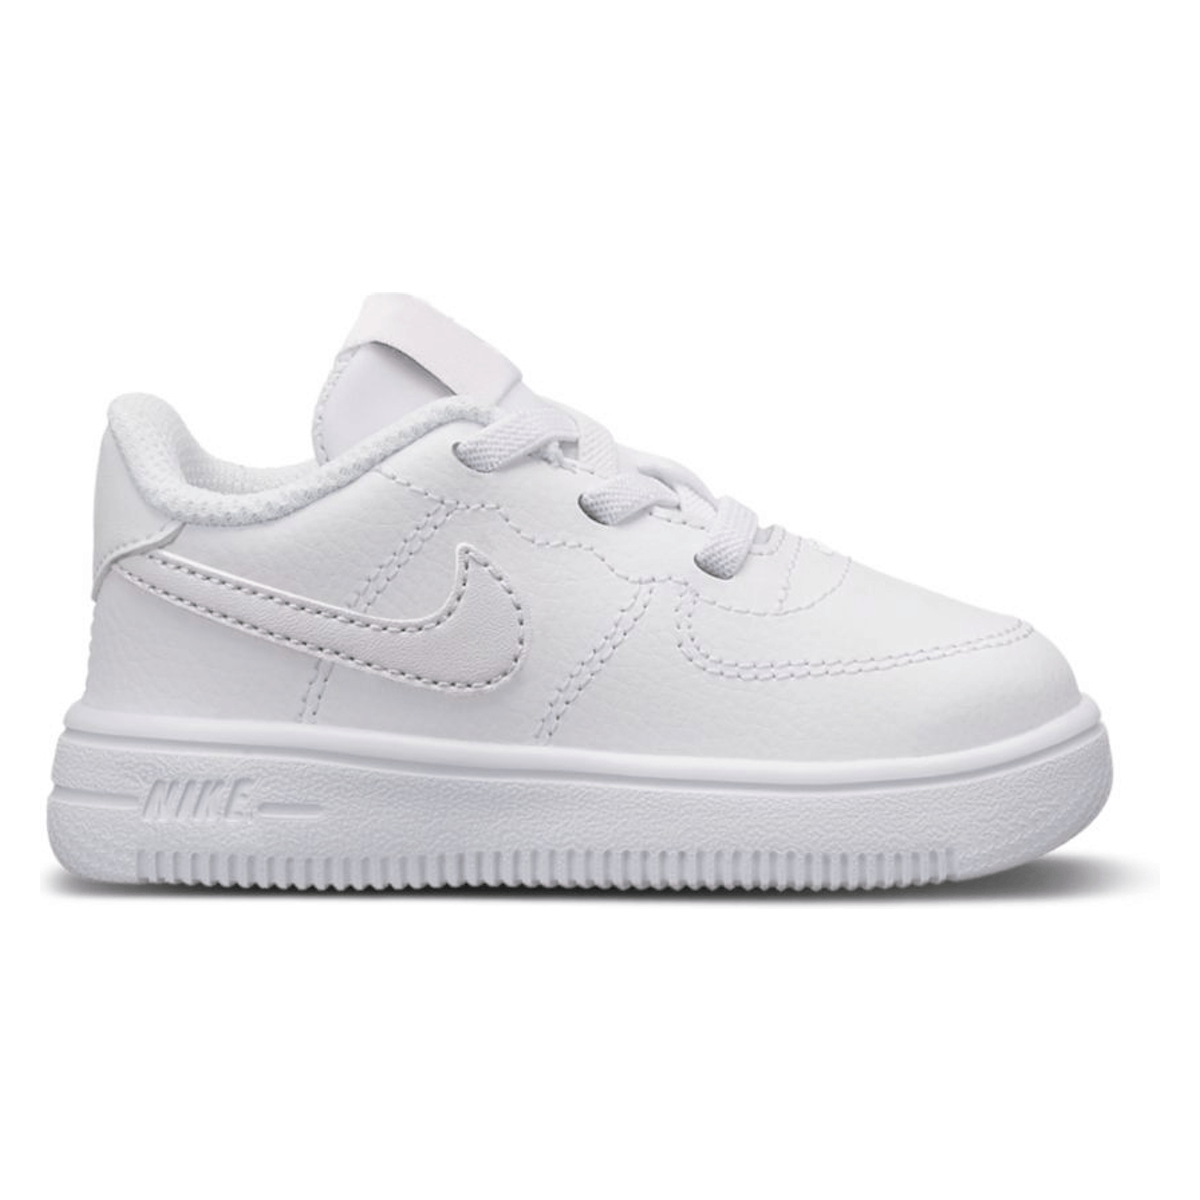 Nike Air Force 1 '18 Triple White (TD)